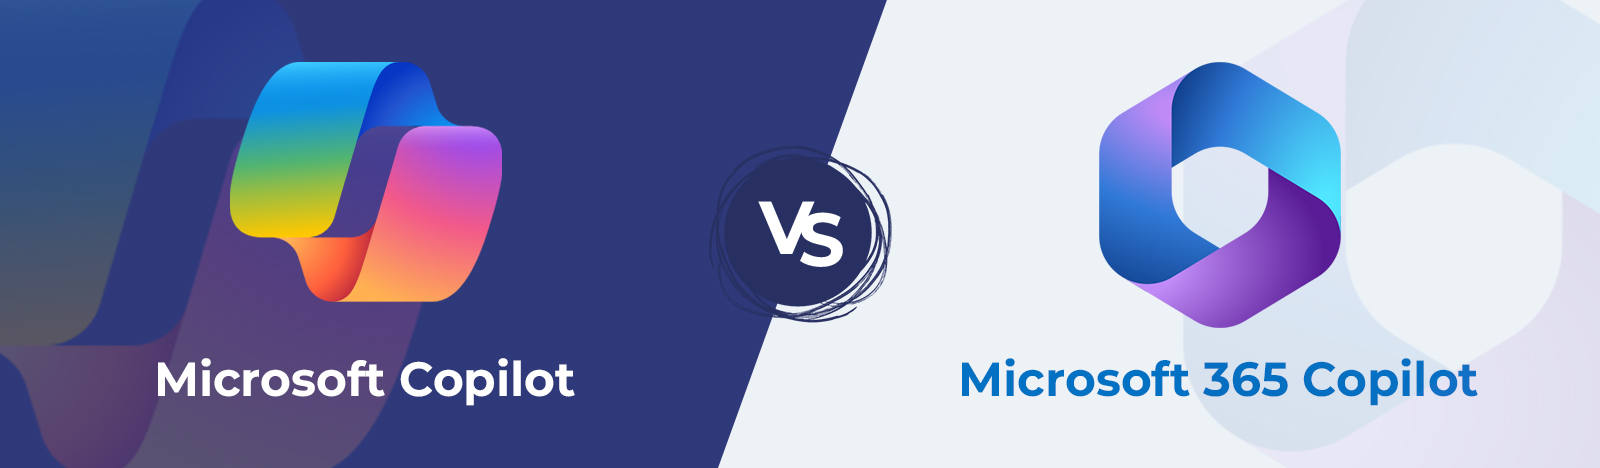 Microsoft Copilot vs Microsoft 365 Copilot: Key Differences